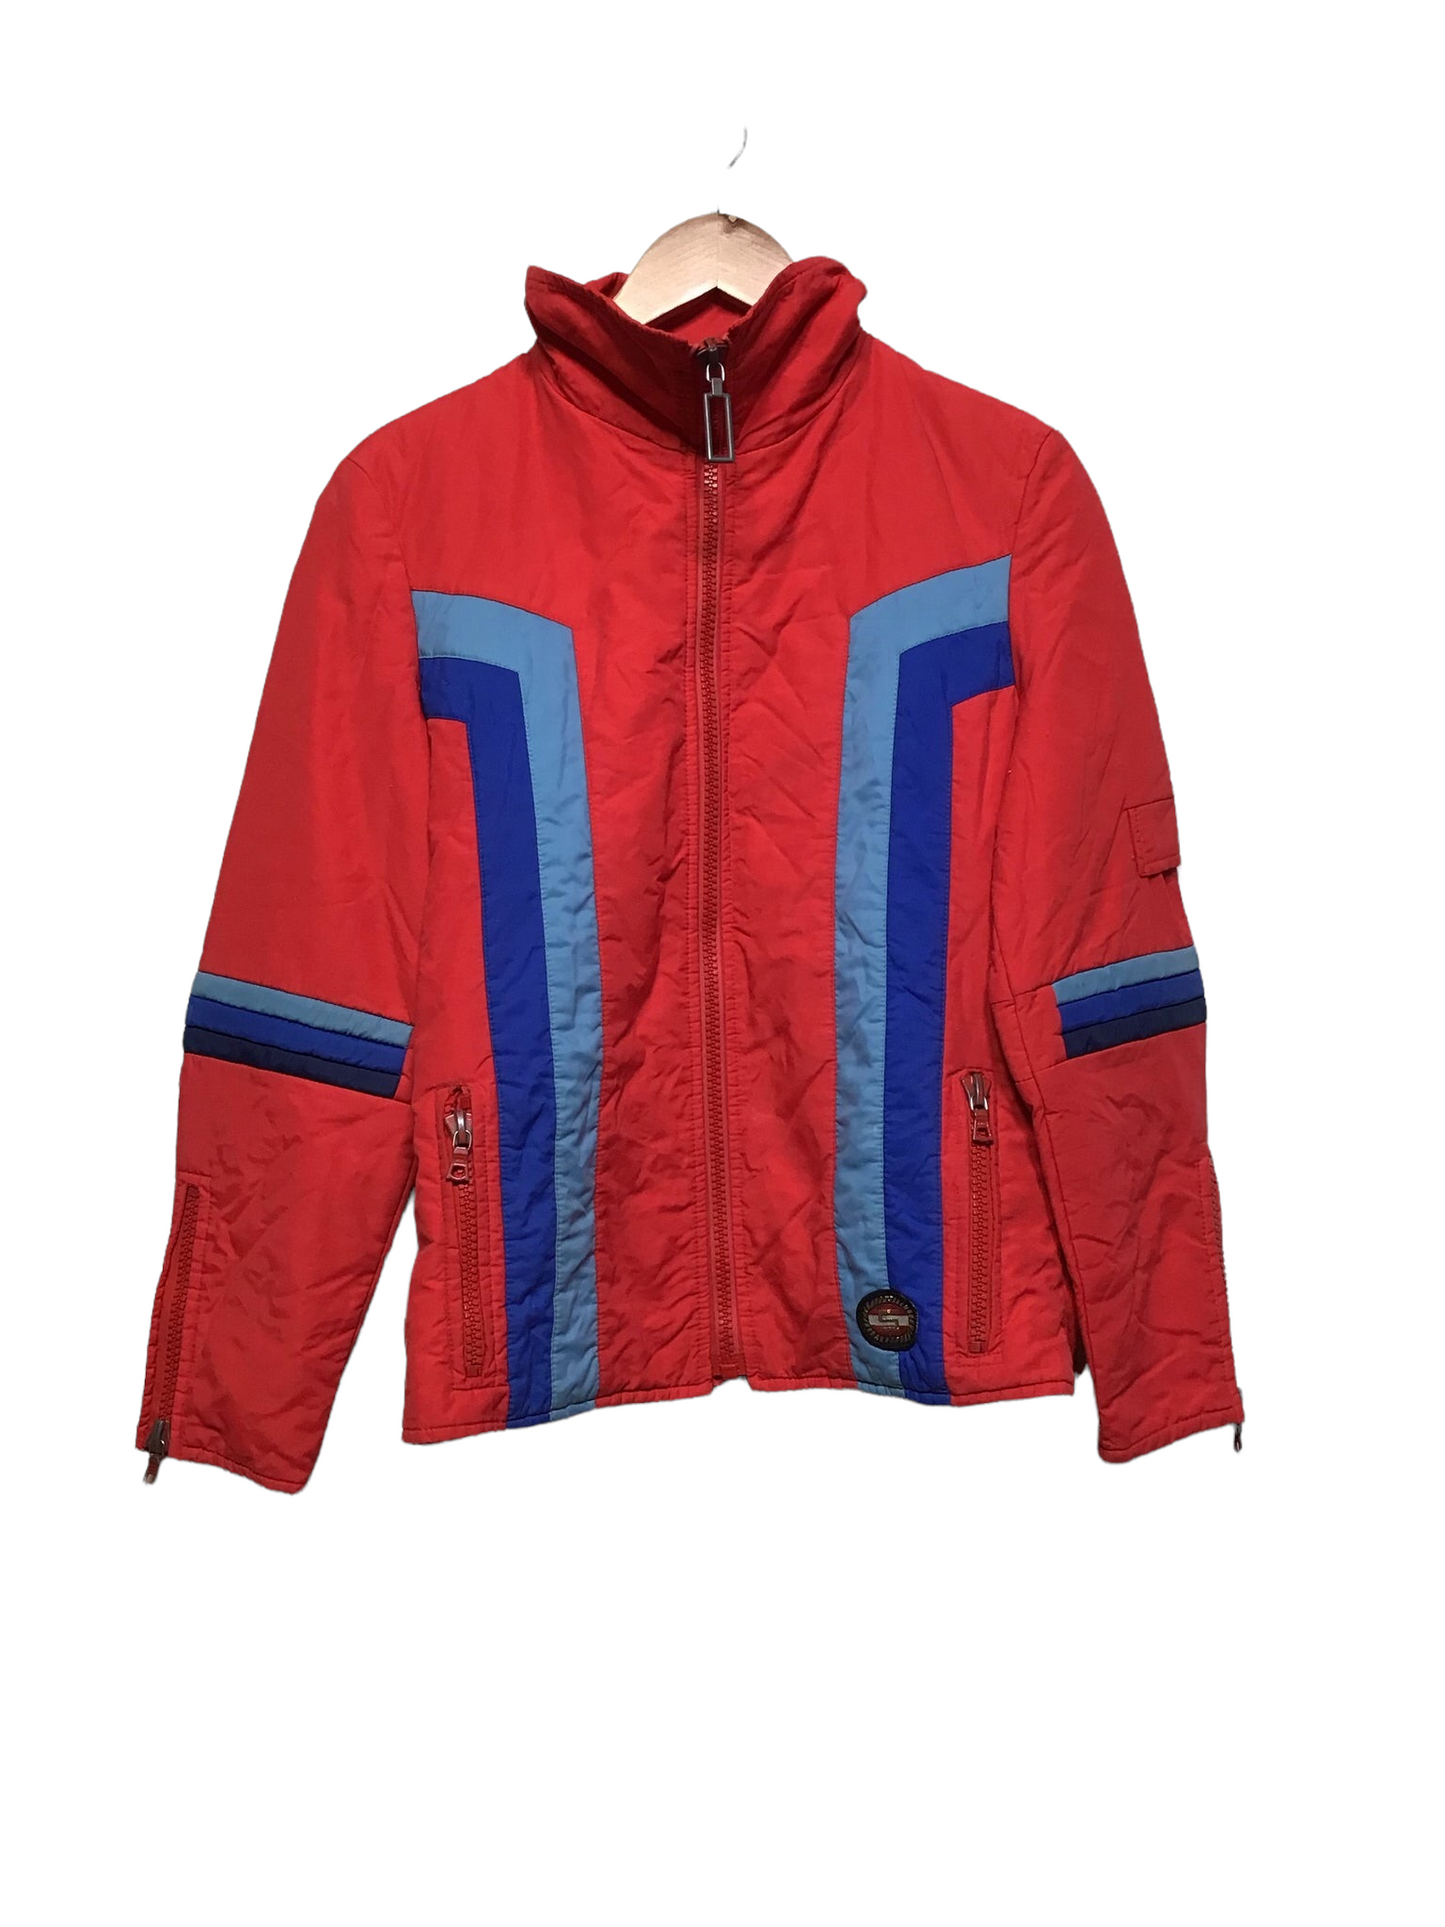 Red & Blue Ski Jacket (Size S)